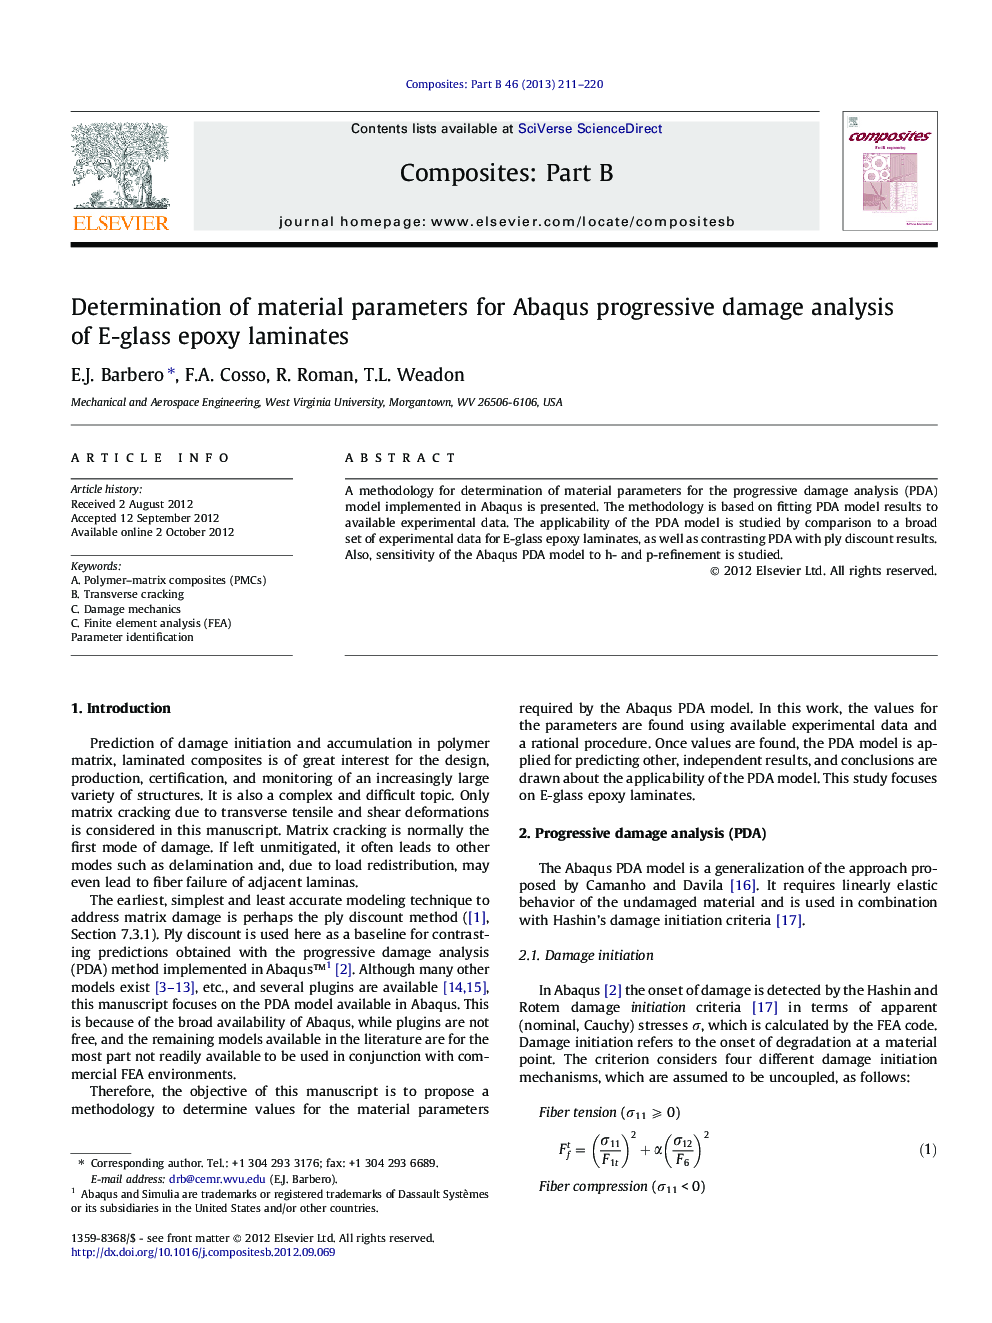 Determination of material parameters for Abaqus progressive damage analysis of E-glass epoxy laminates